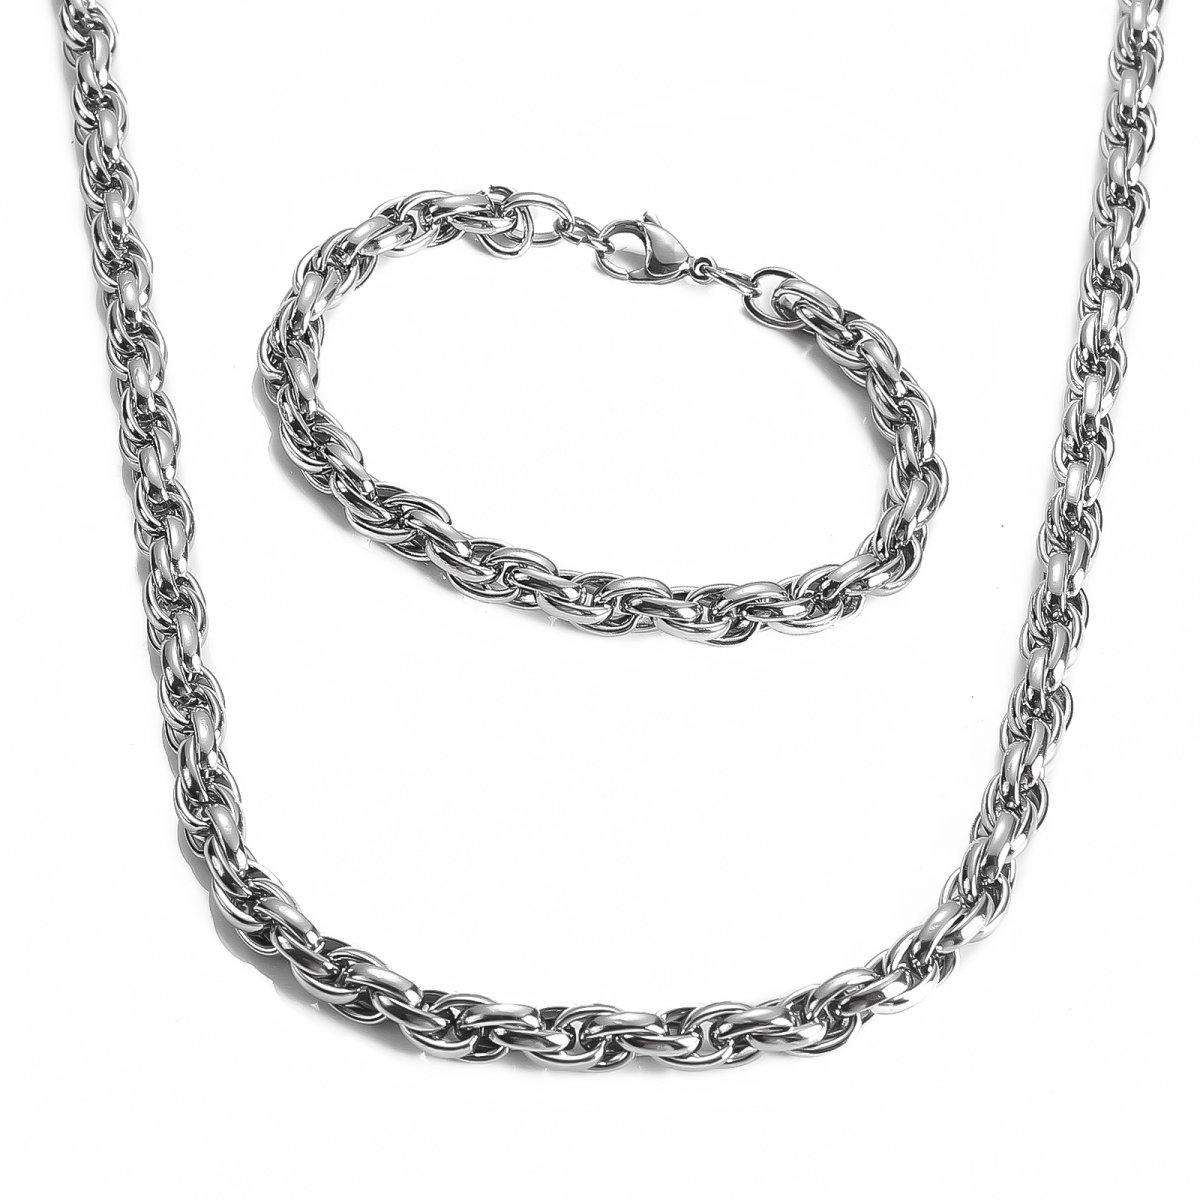 King Chain Set US$3.2/PC-NORSECOLLECTION- Viking Jewelry,Viking Necklace,Viking Bracelet,Viking Rings,Viking Mugs,Viking Accessories,Viking Crafts